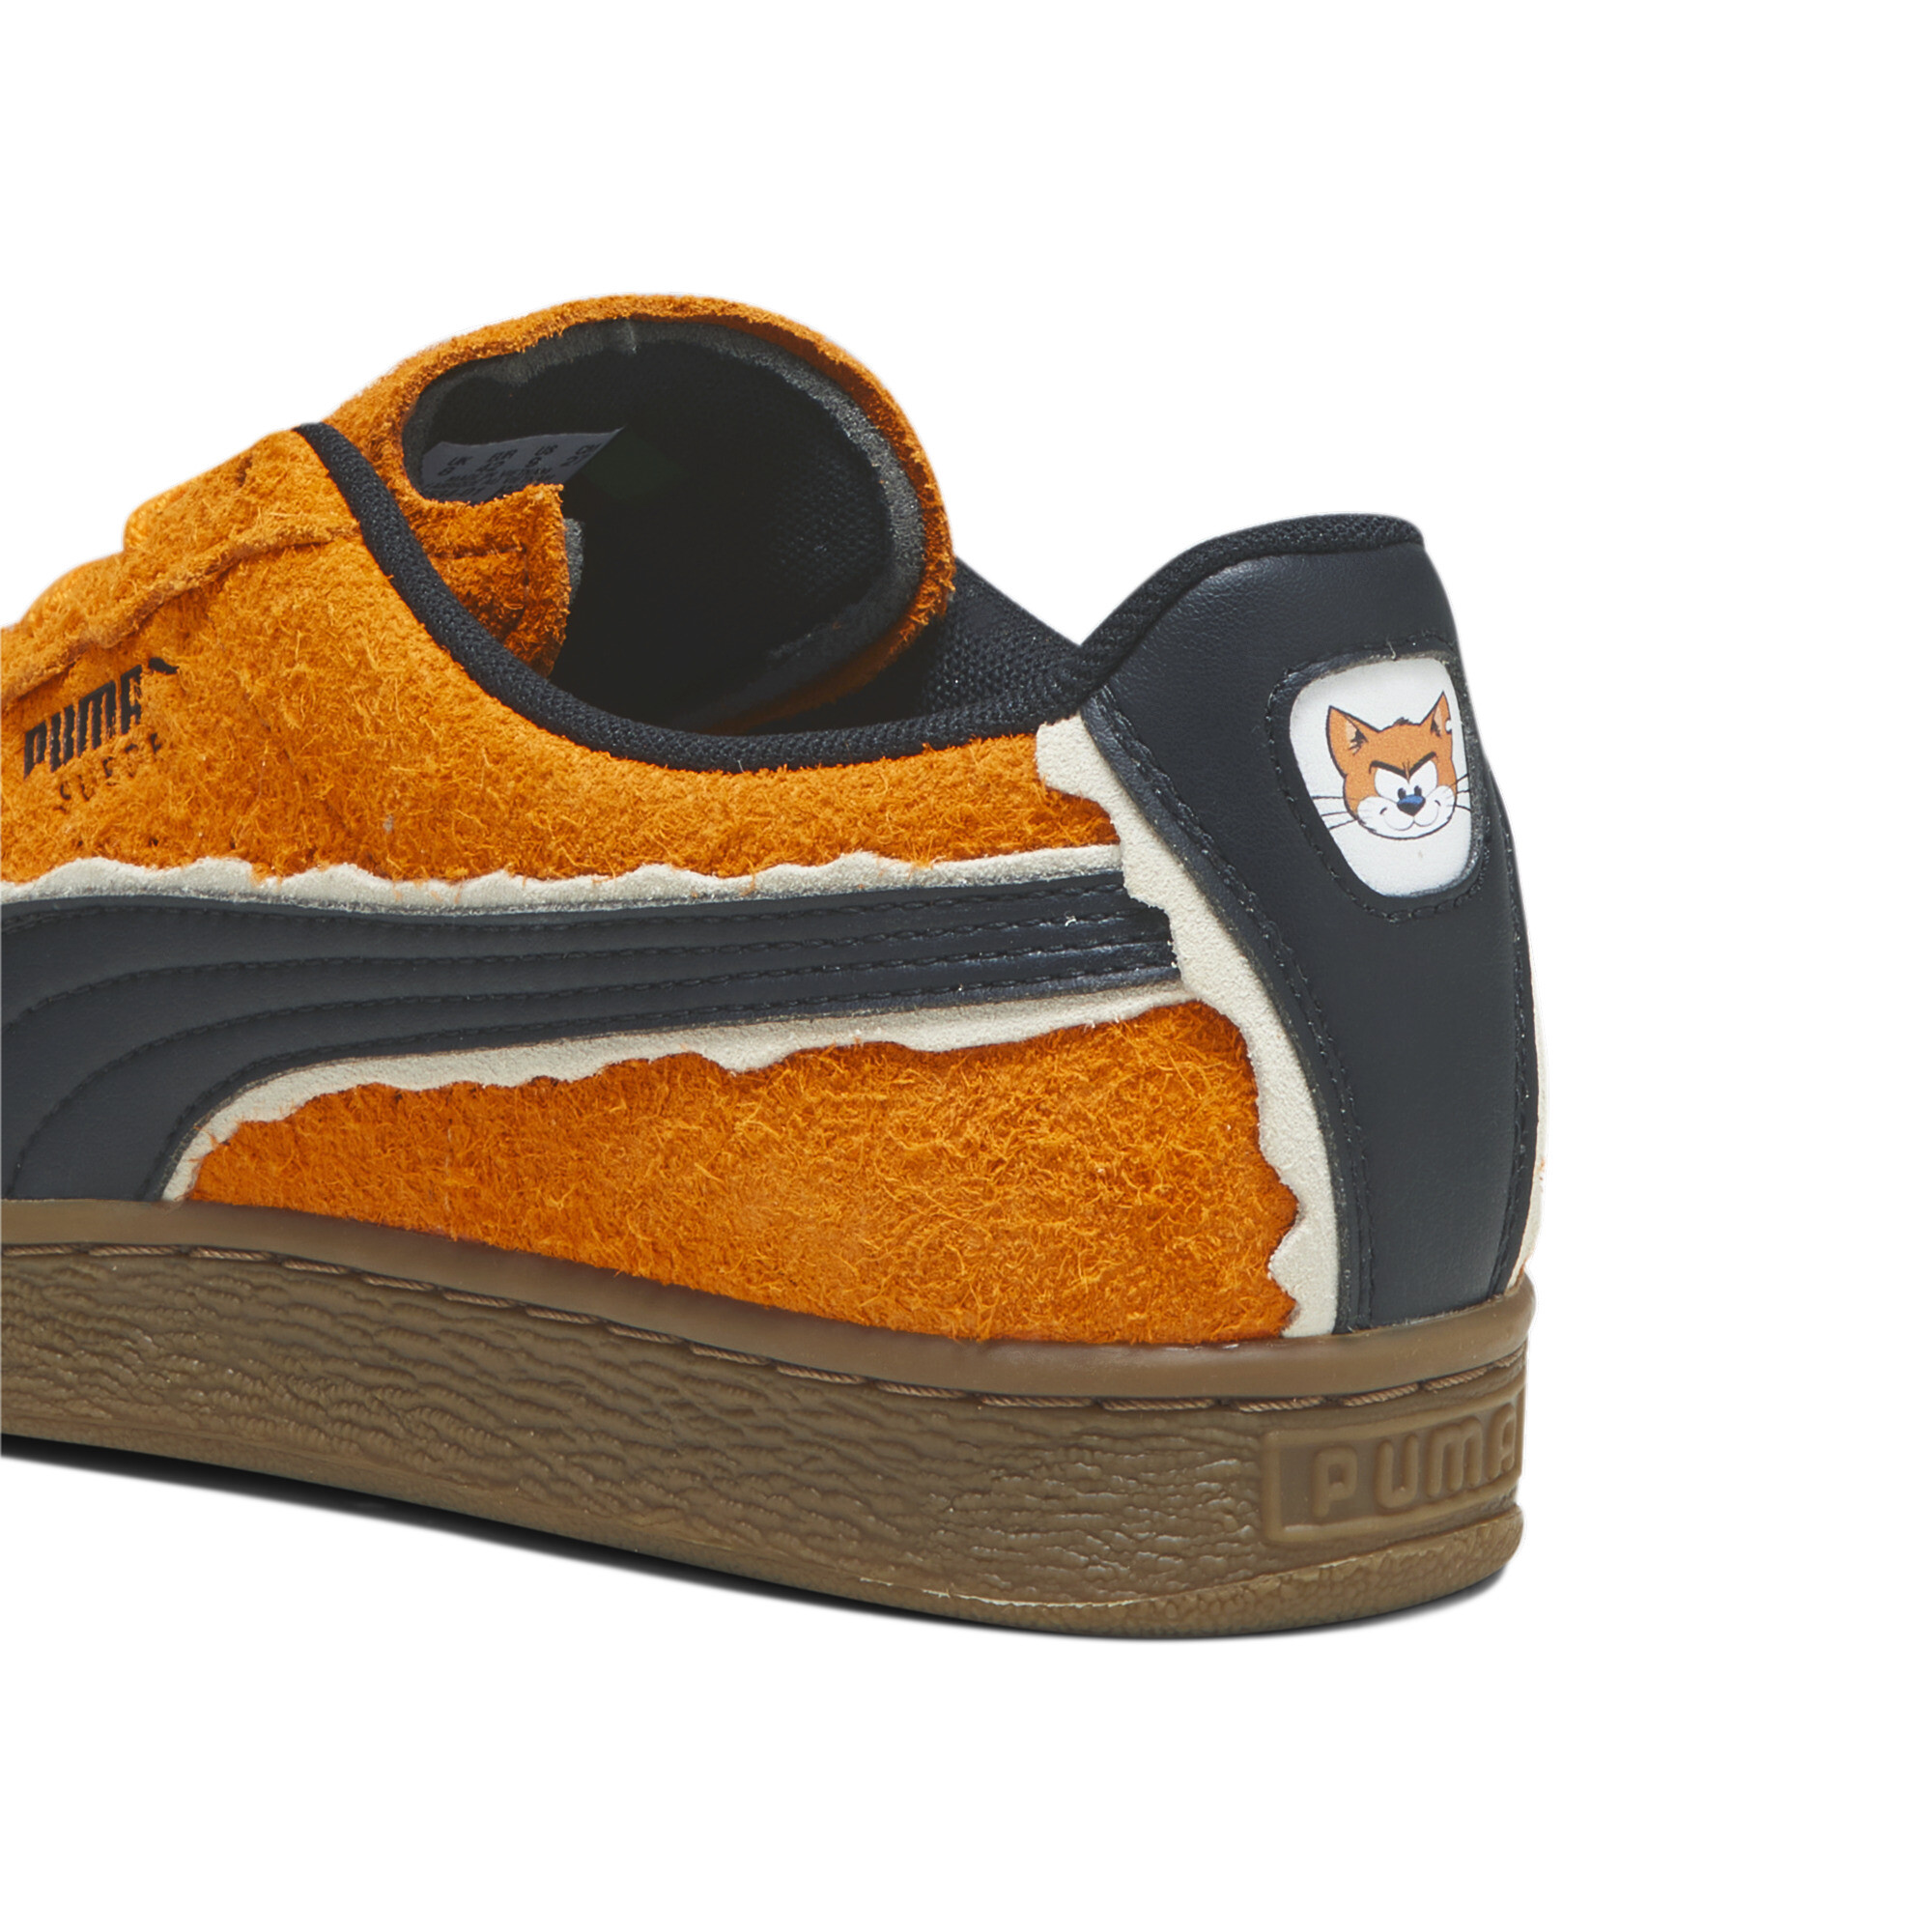 Men's PUMA X THE SMURFS Suede Sneakers In Orange, Size EU 43